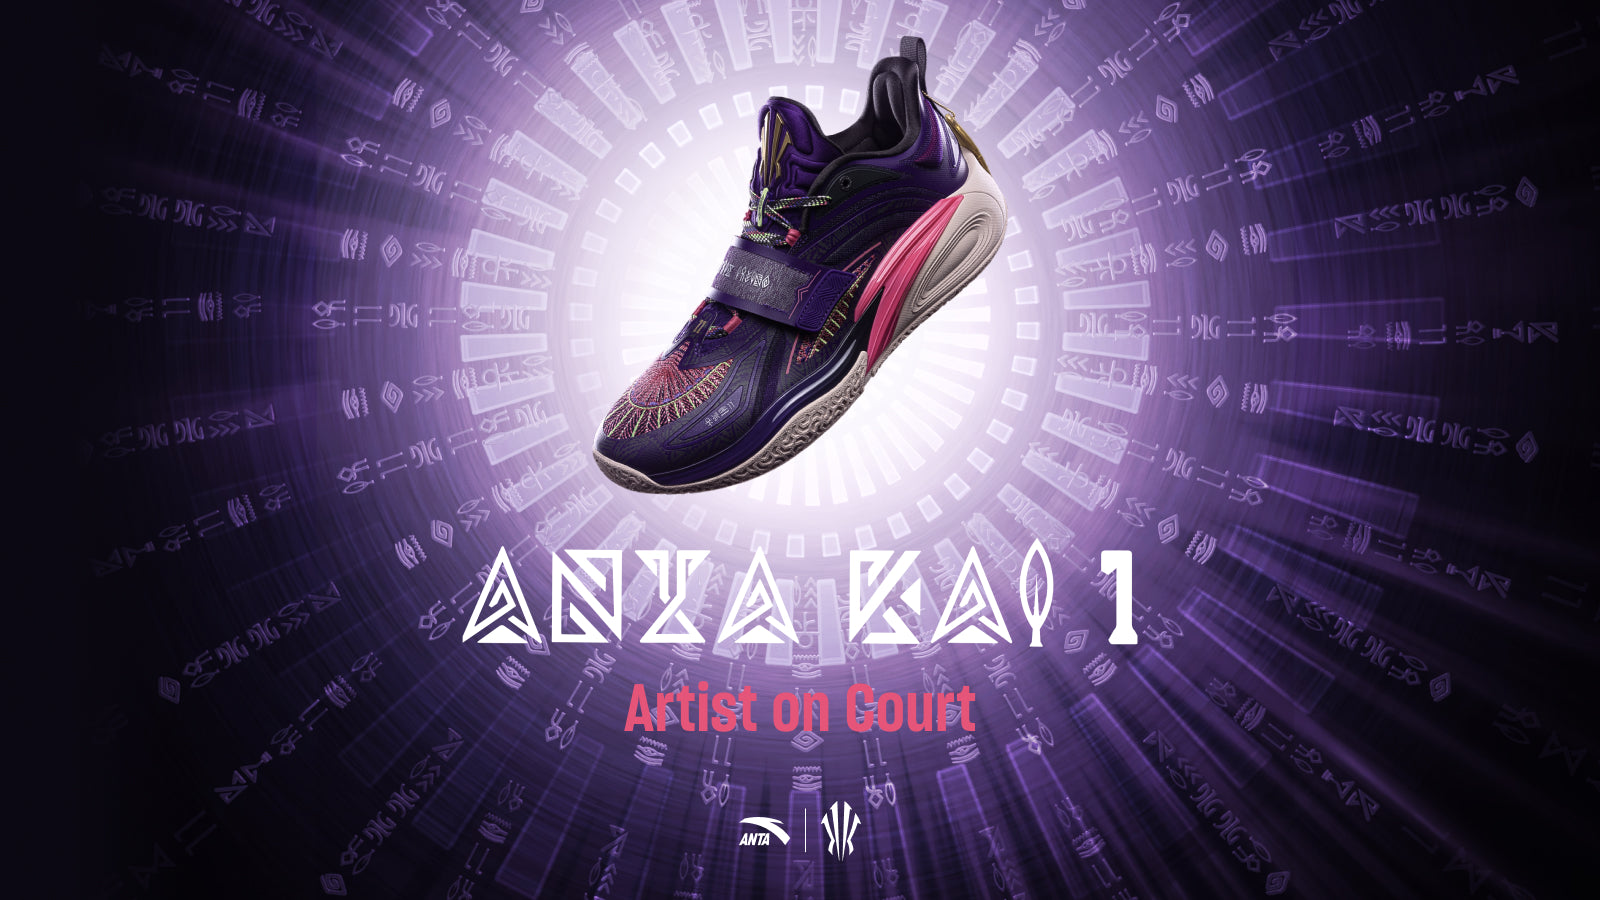 ANTA KAI 1 "Artist On Court" Drop